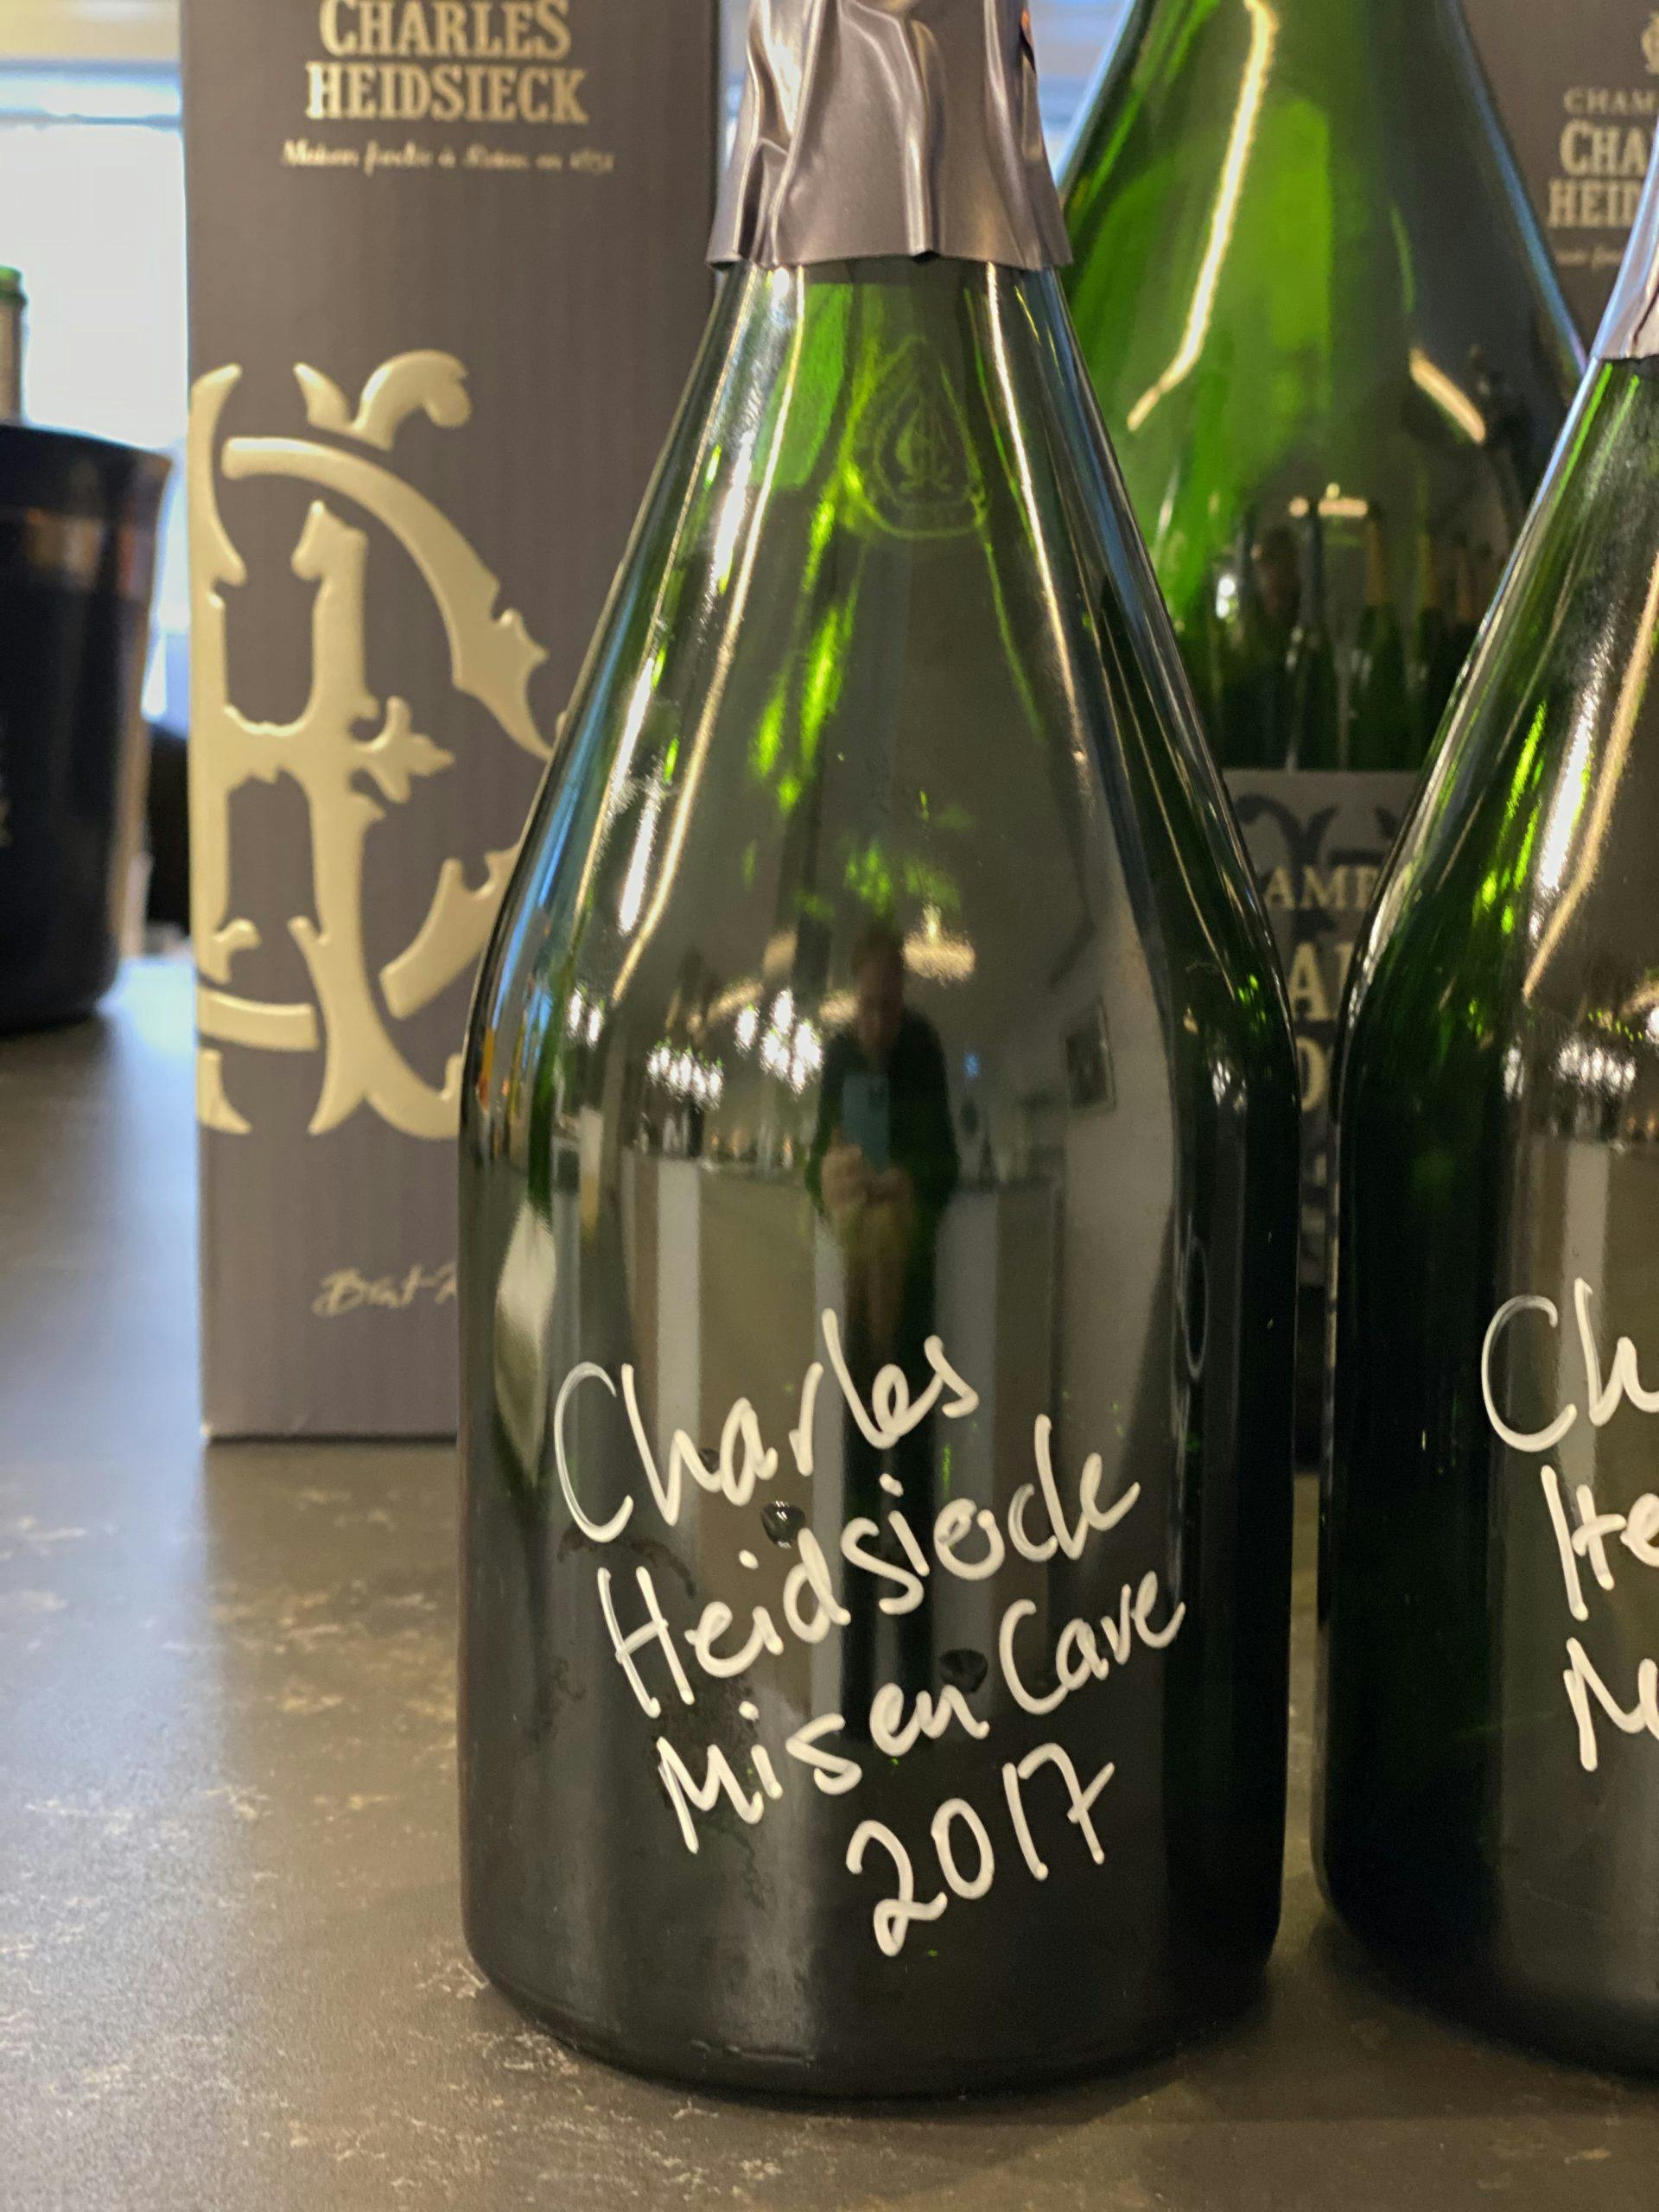 Champagne Charles Heidsieck Mis en Cave 2017 - DinVinguide